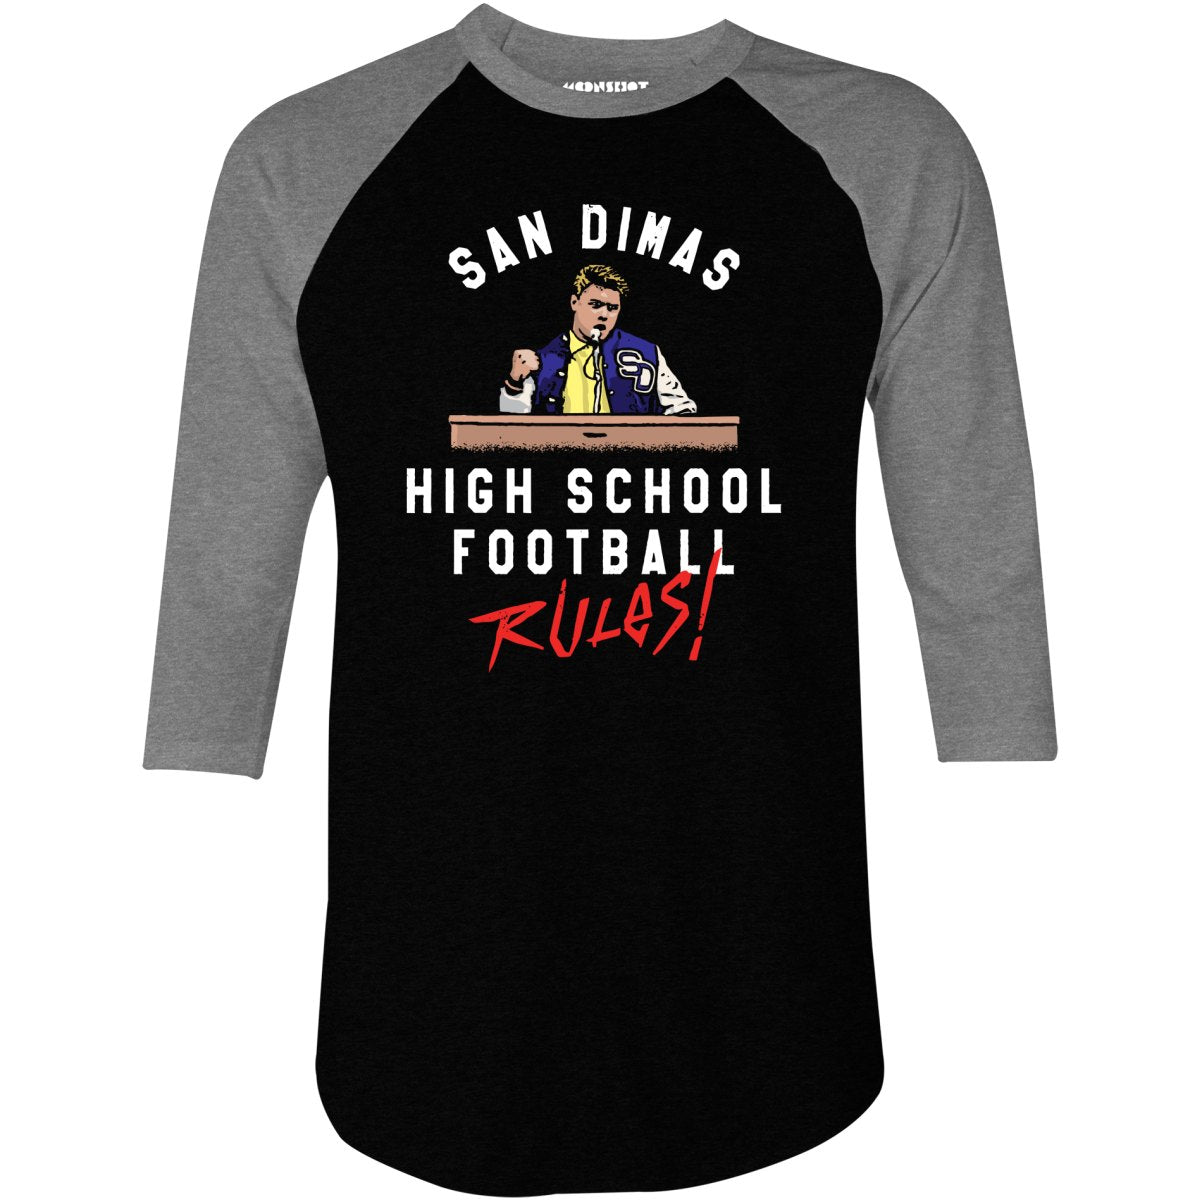 San Dimas High School Football Rules - 3/4 Sleeve Raglan T-Shirt